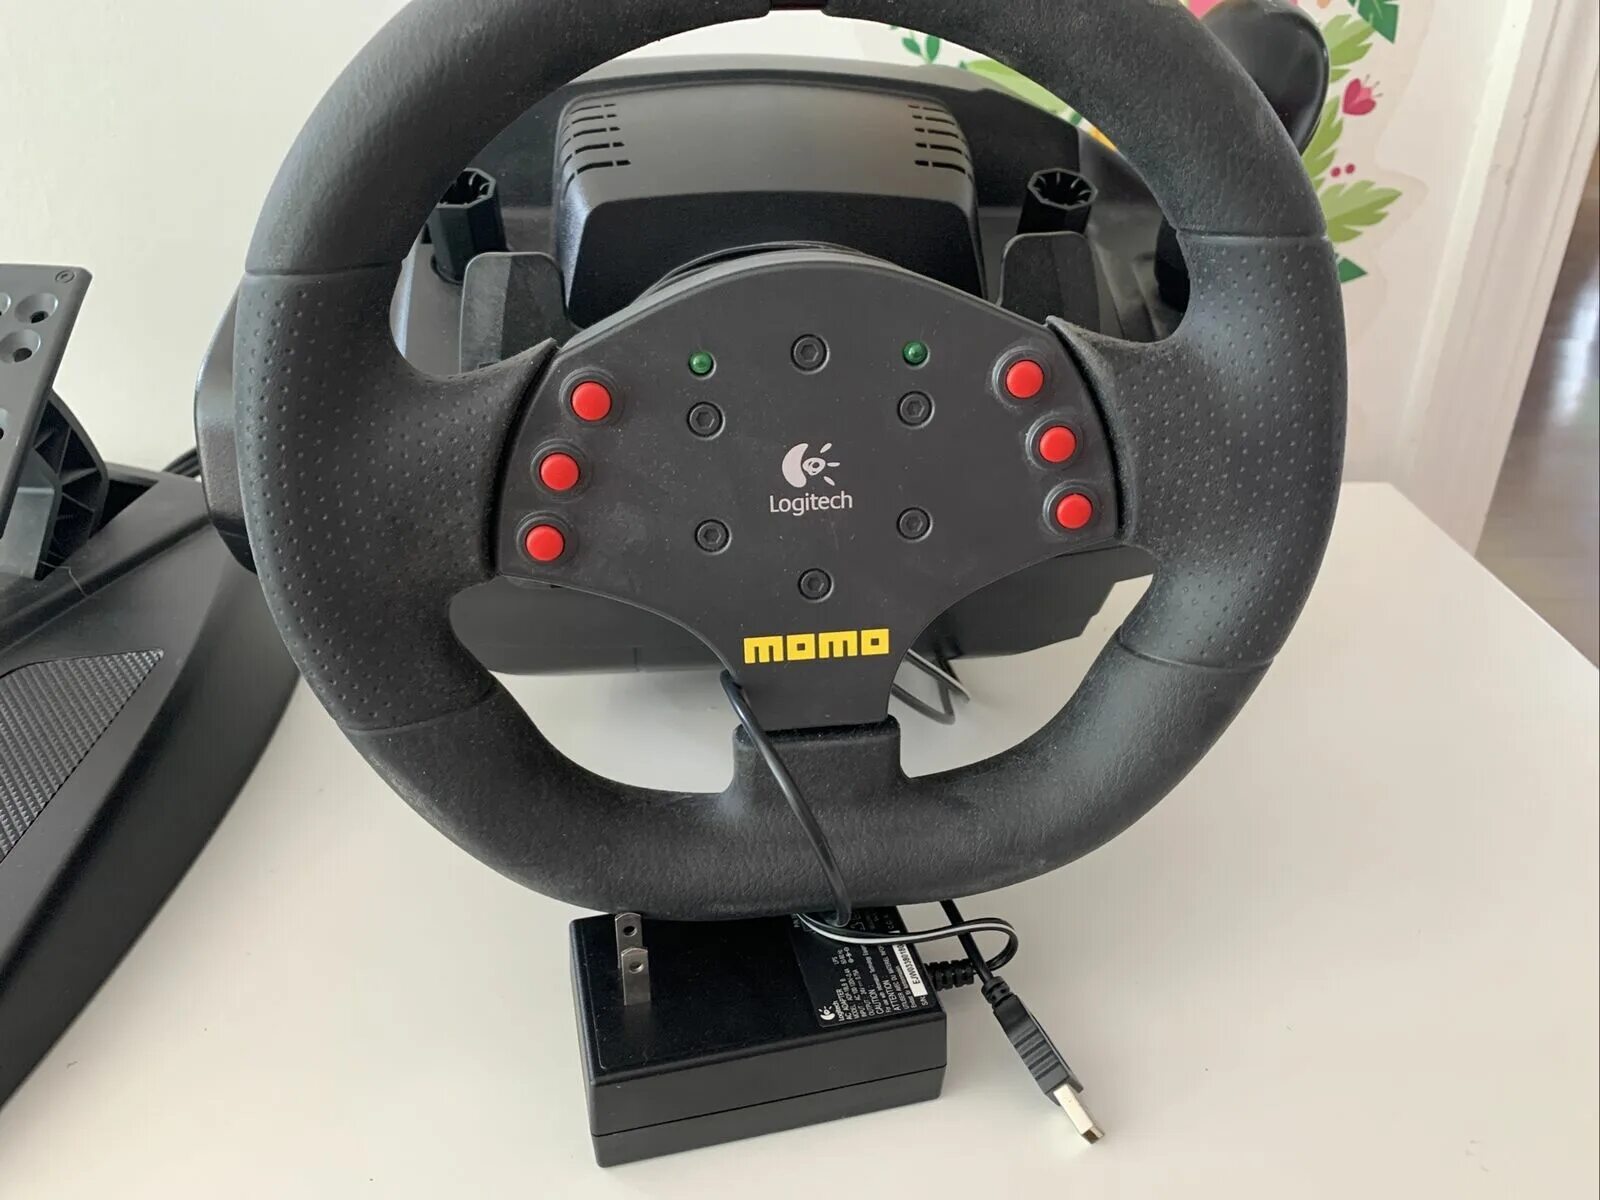 Руль момо рейсинг. Руль Logitech Momo Racing. Logitech Momo Racing Force feedback Wheel. Руль Logitech Momo Racing Force. Руль Лоджитек МОМО рейсинг.